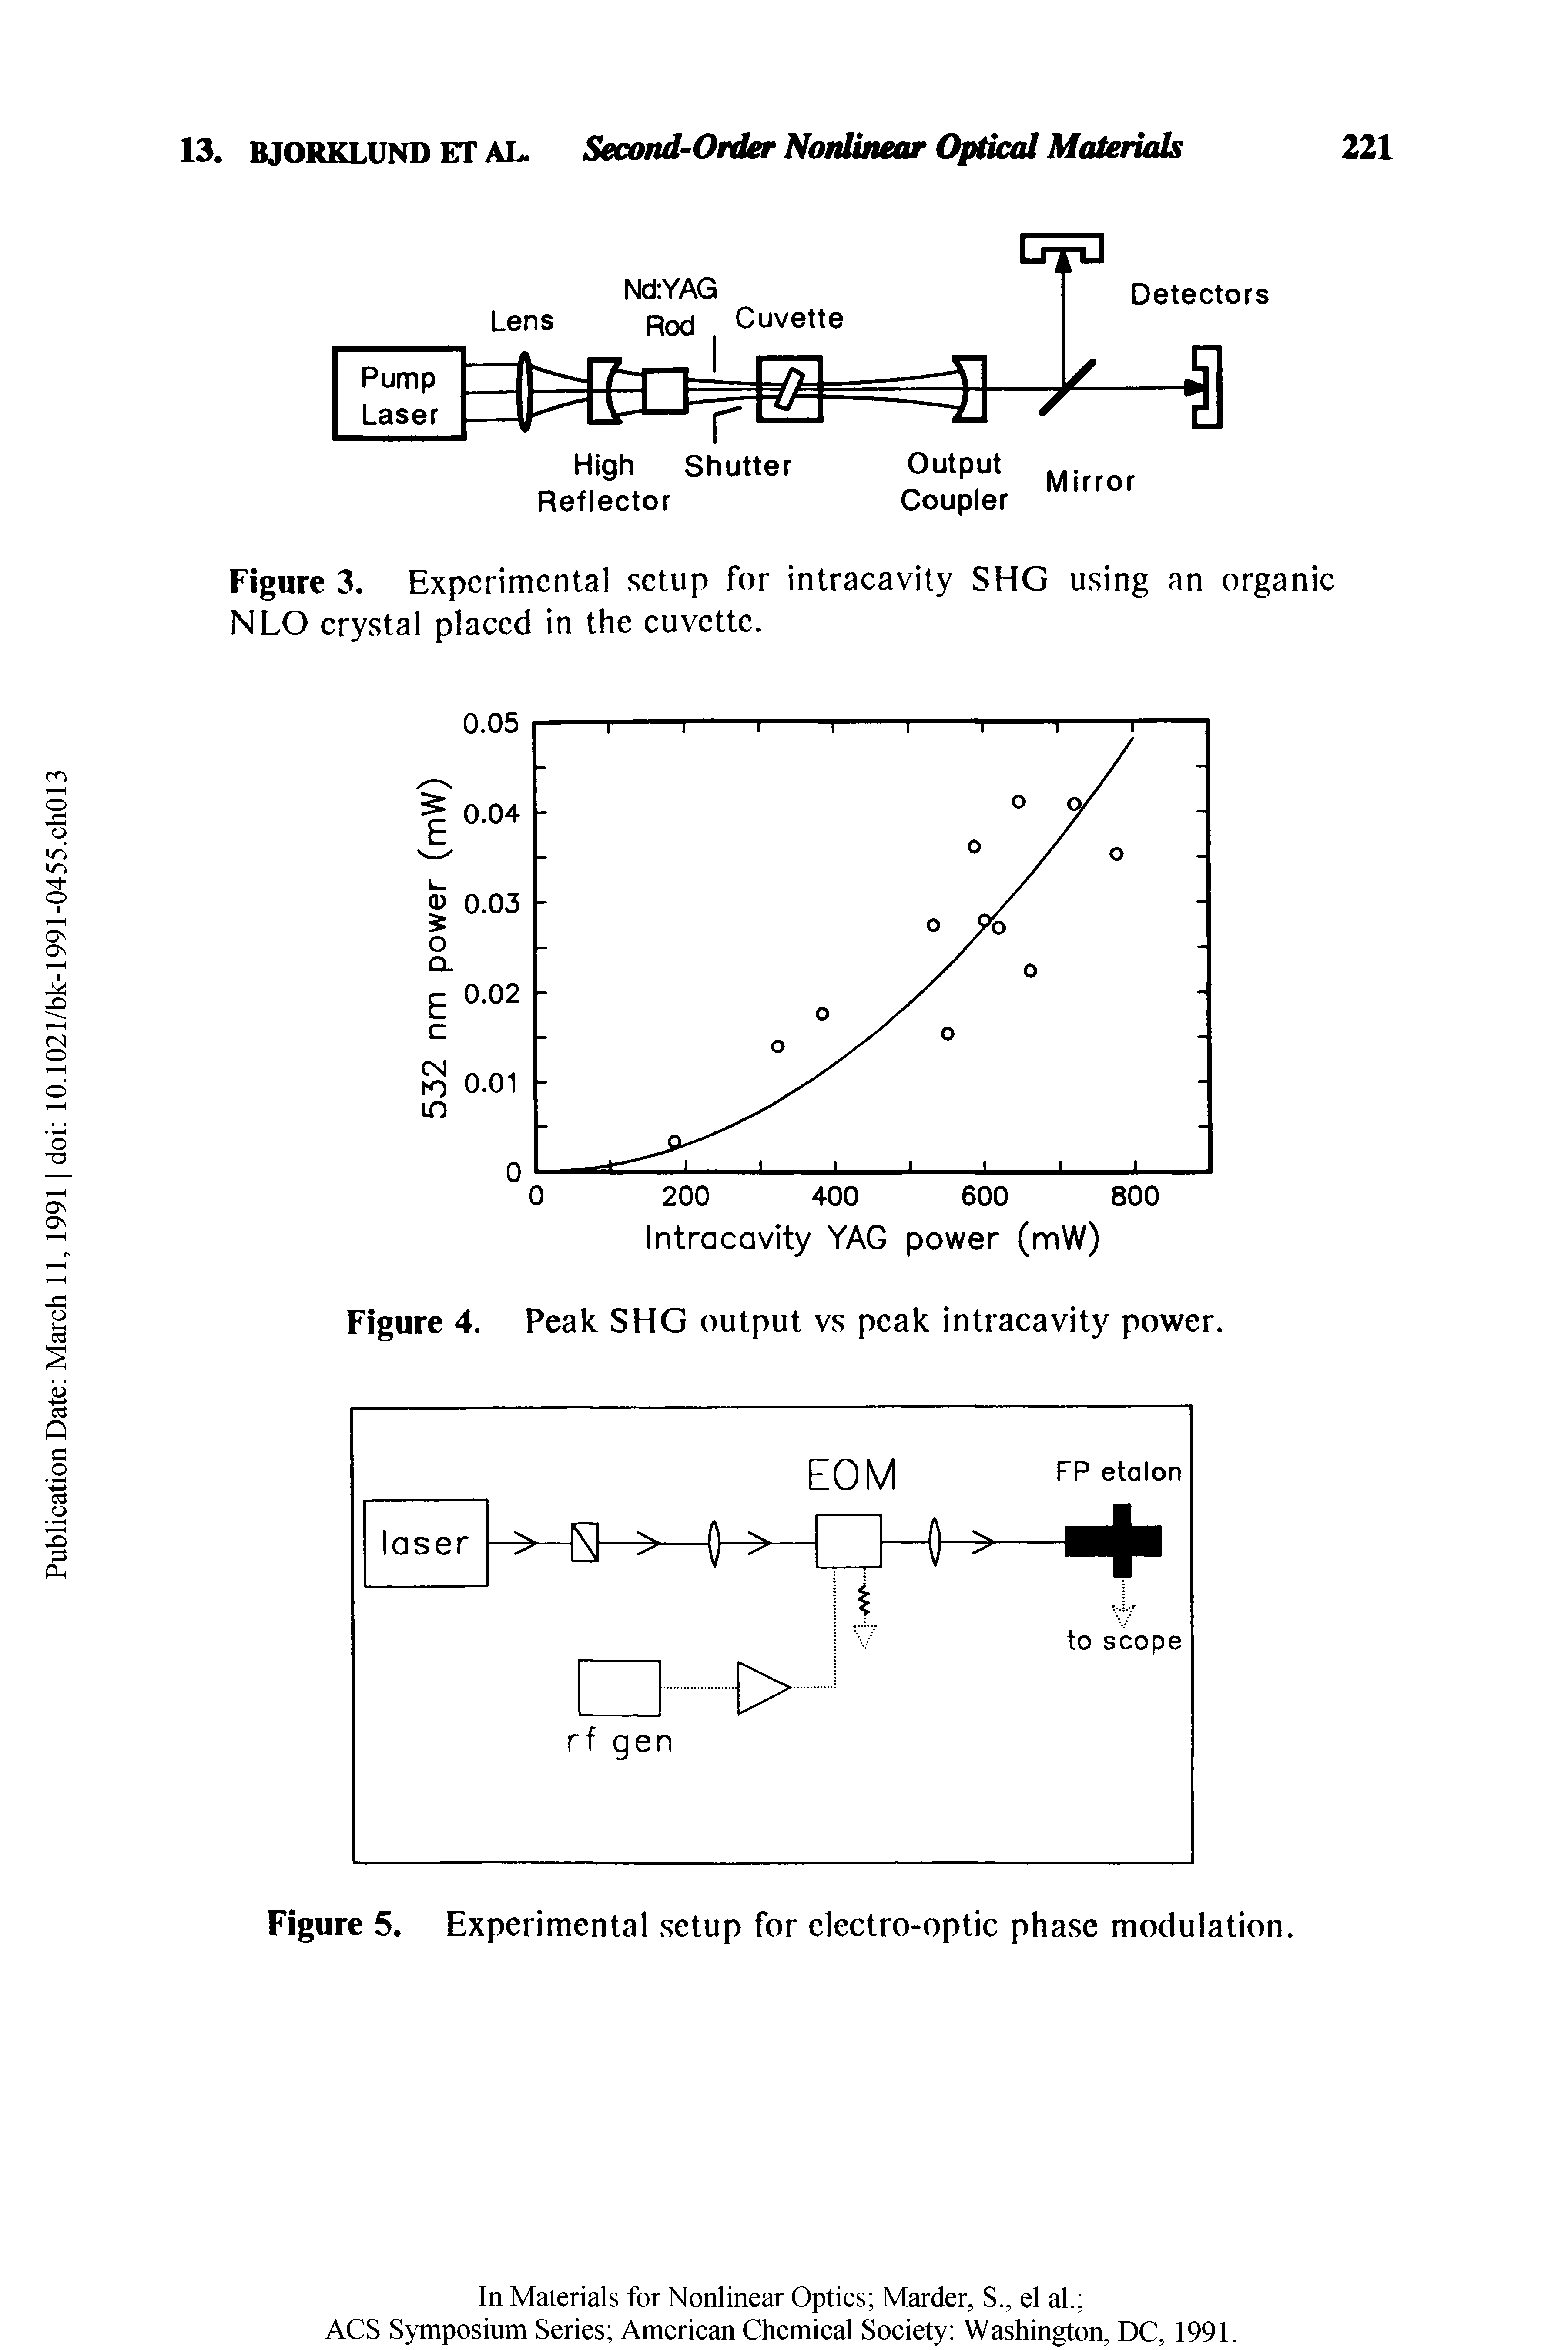 Figure 5. Experimental setup for electro-optic phase modulation.